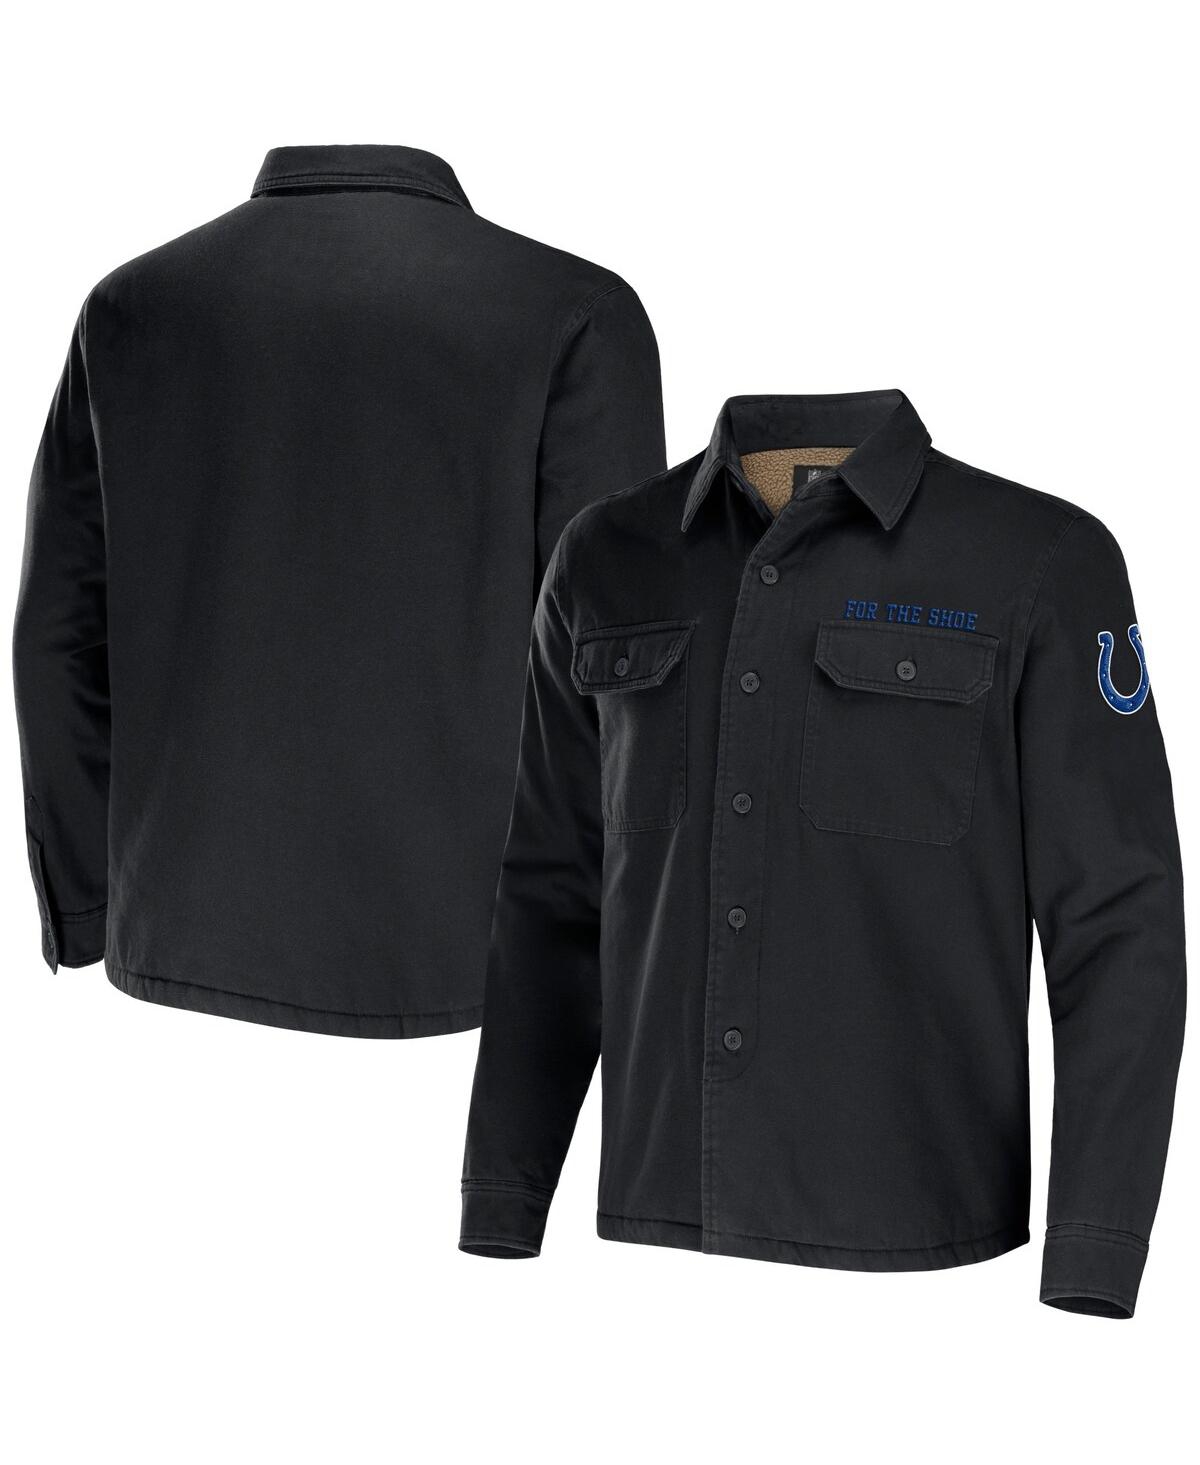 Men's Nfl x Darius Rucker Collection by Fanatics Black Indianapolis Colts Canvas Button-Up Shirt Jacket - Black